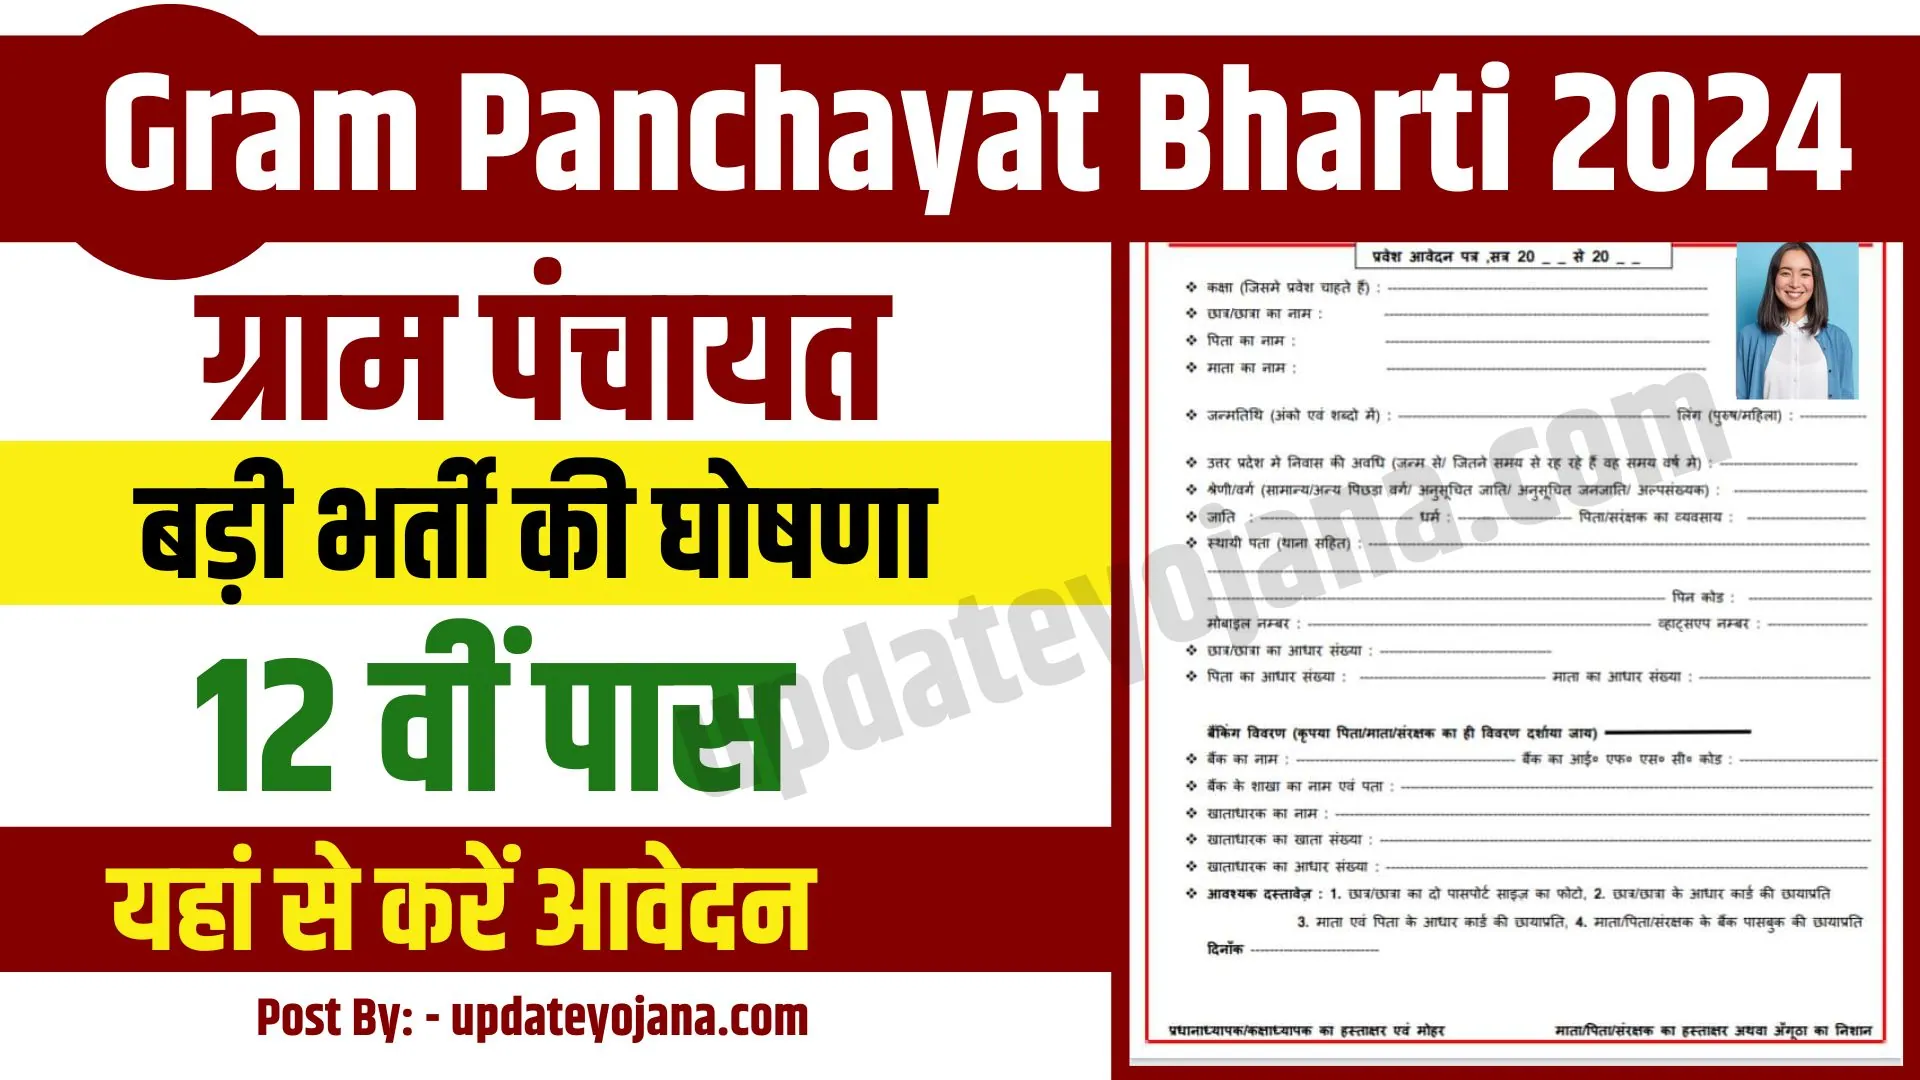 Gram Panchayat Bharti 2024